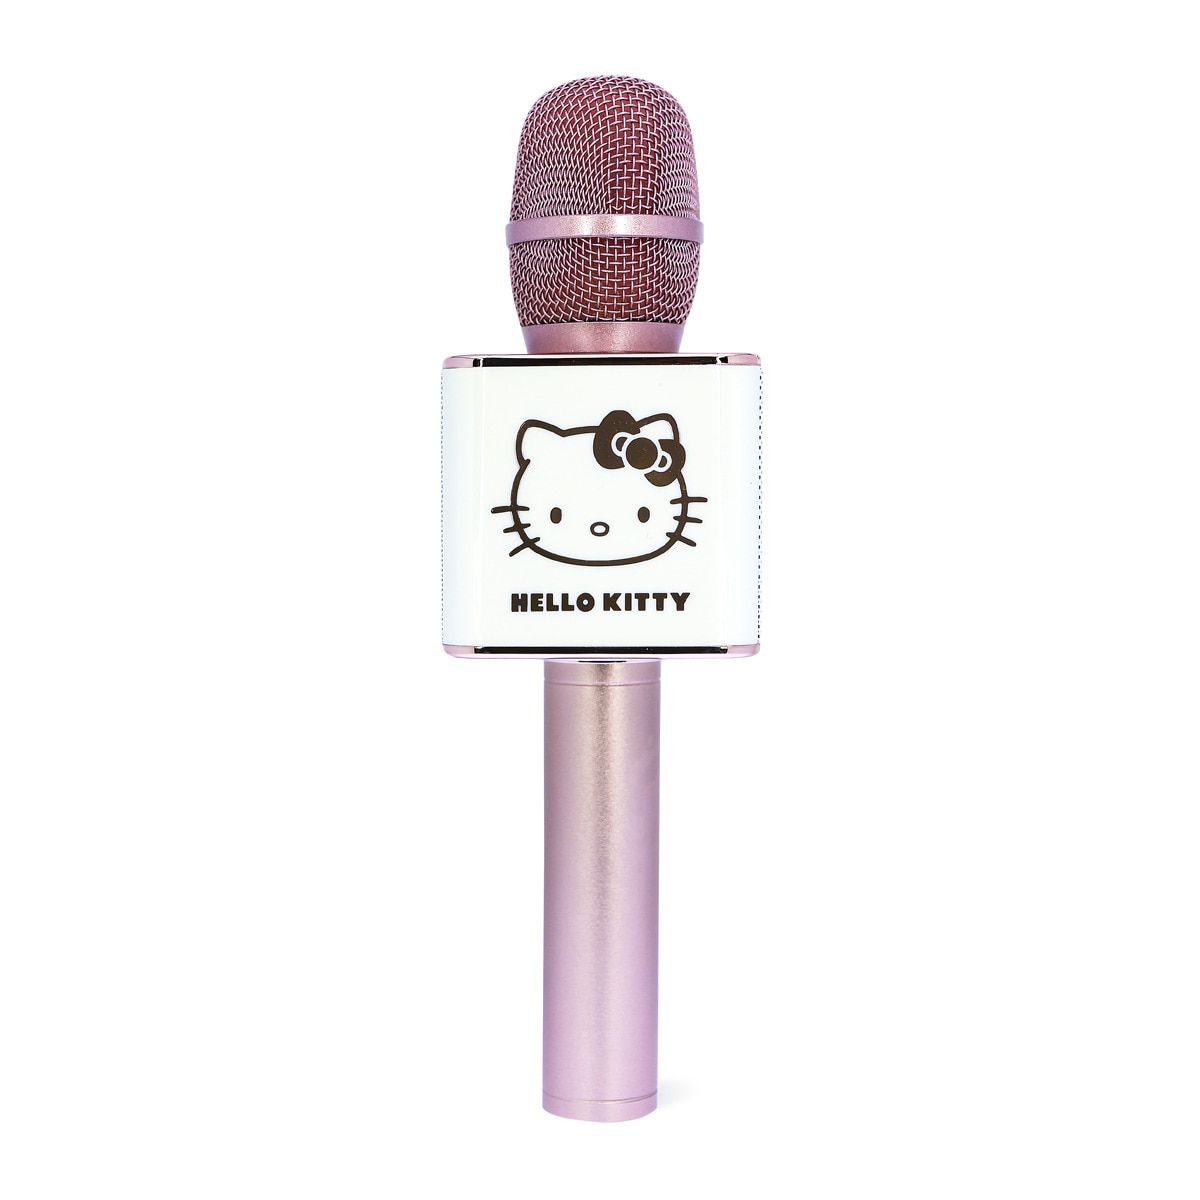 HELLO KITTY - Micrófono karaoke Hello Kitty inalámbrico con altavoz.